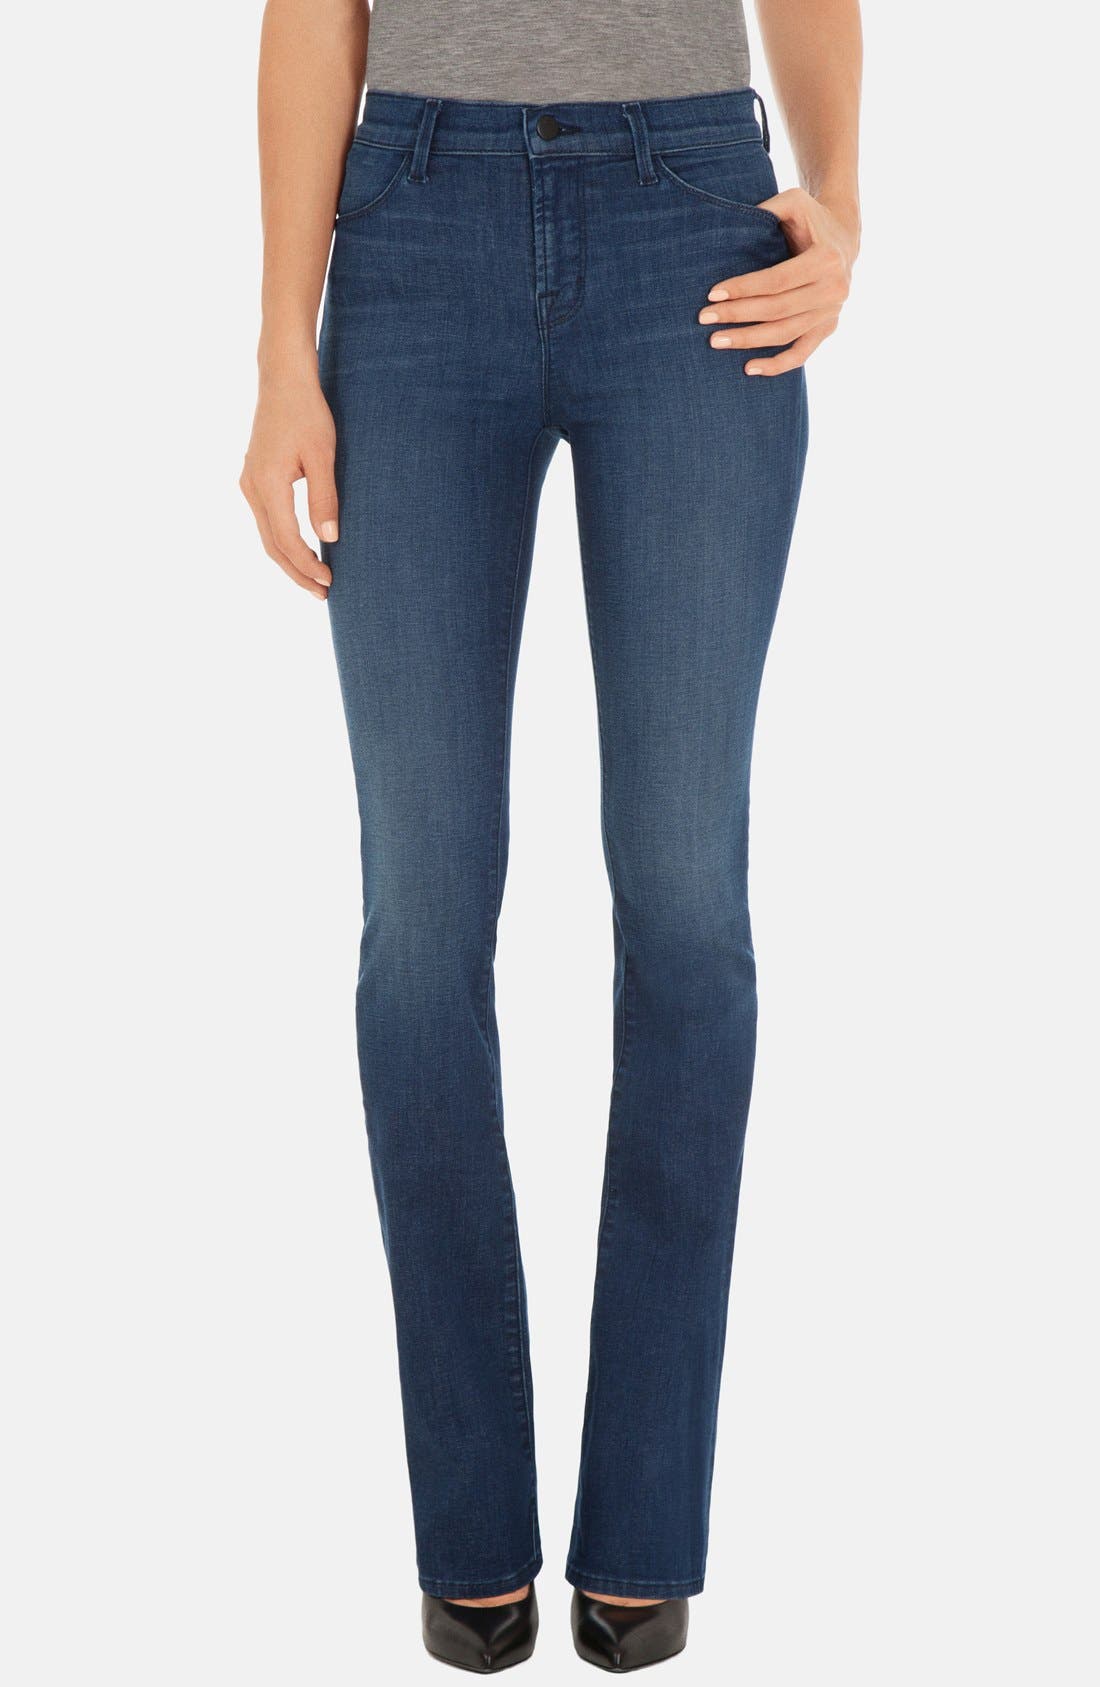 nordstrom j brand jeans